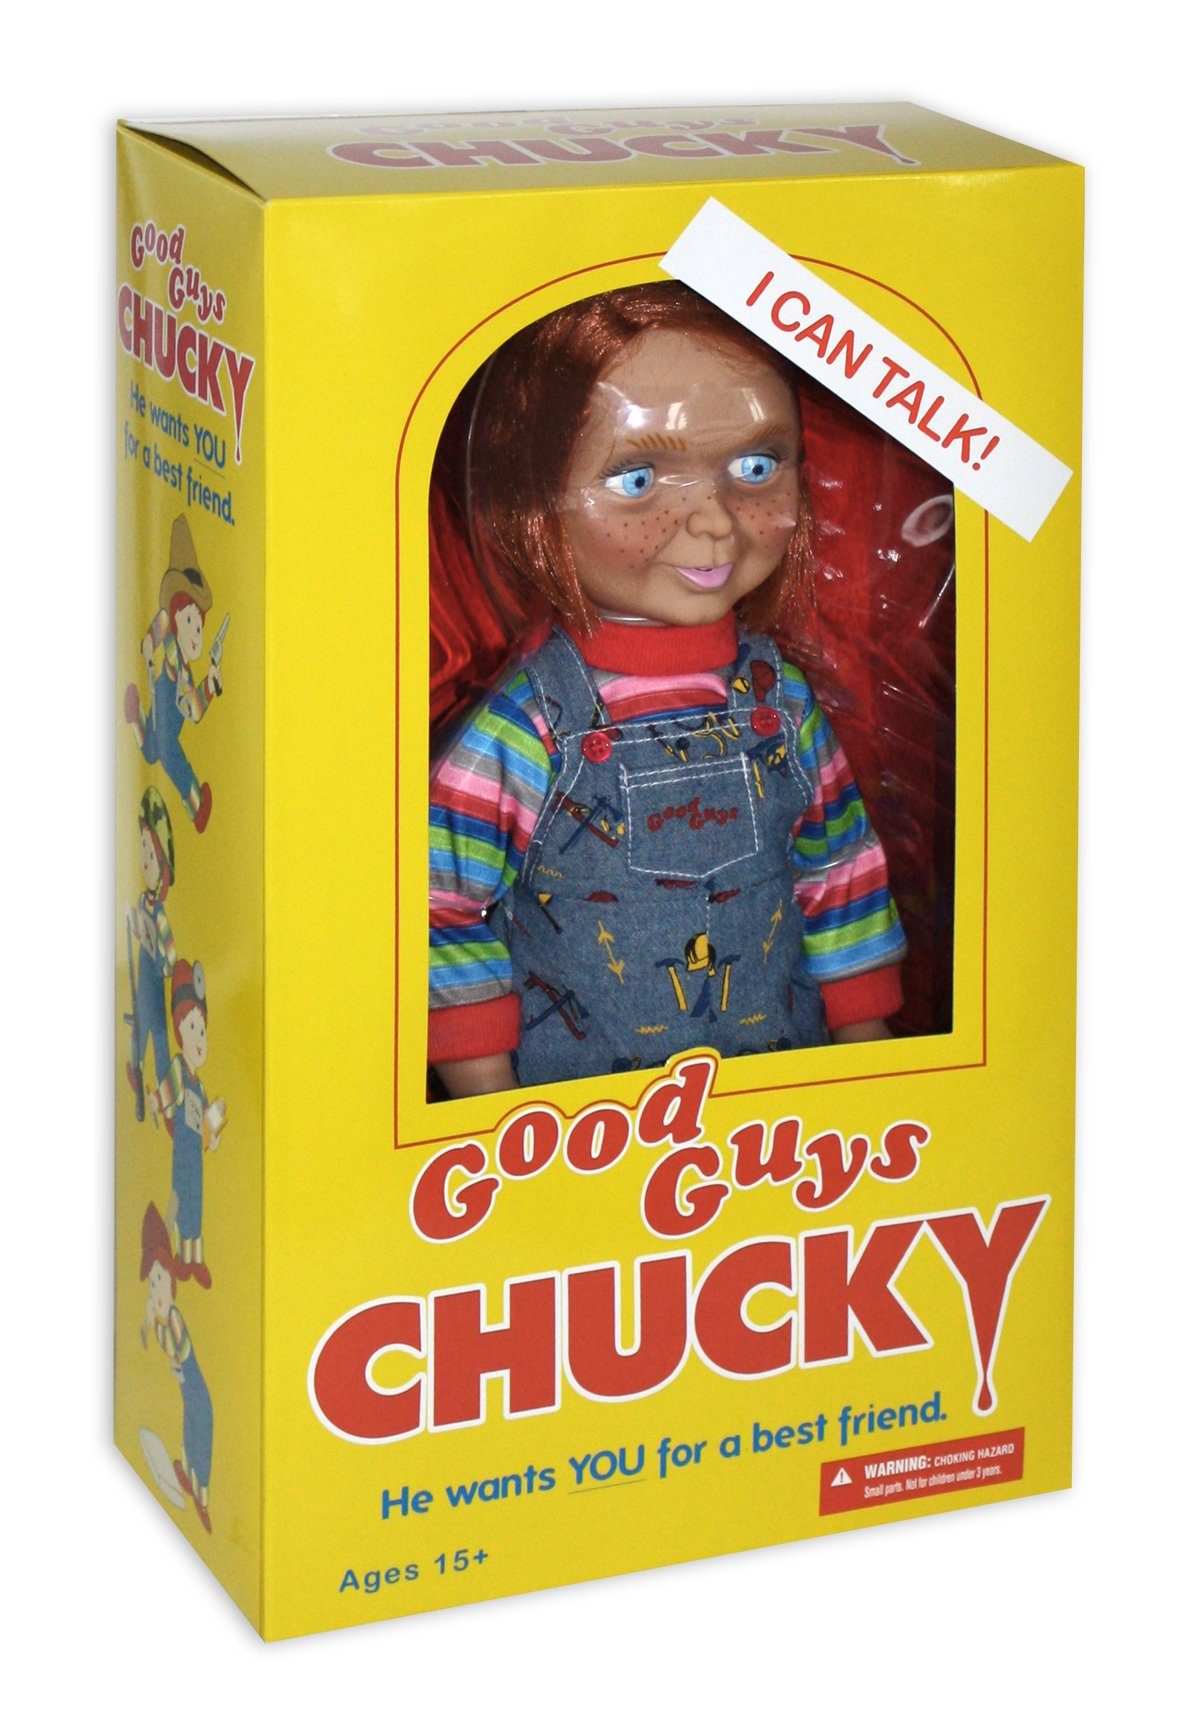 Guy MEZCO Child's Puppe Chucky Good Actionfigur 15 Play